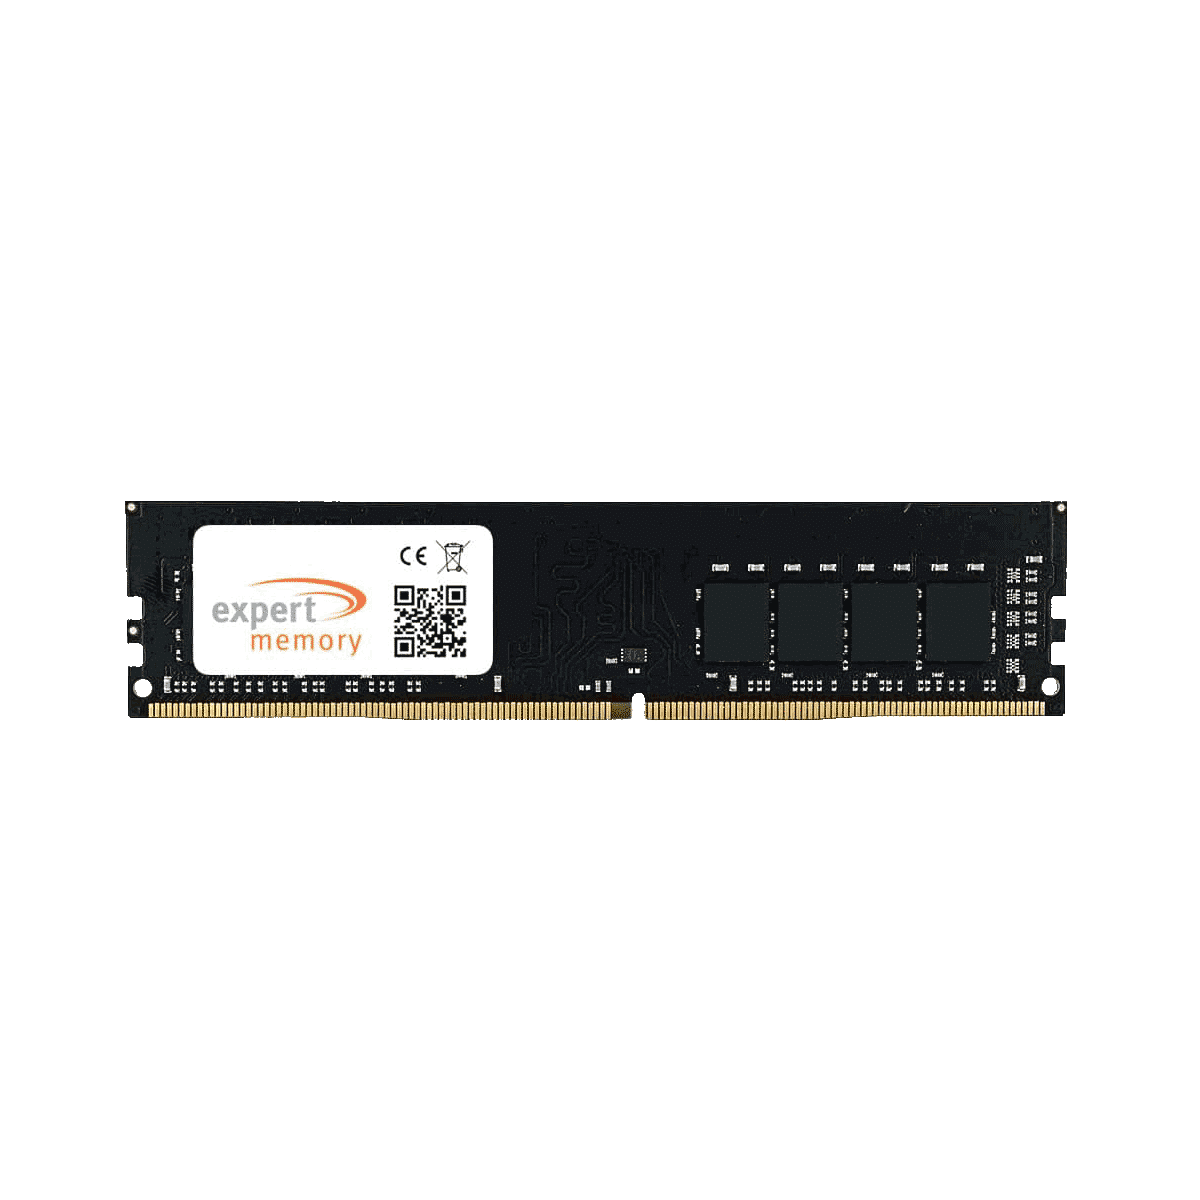 16 DDR4 RAM GA-AX370 MEMORY 16GB Gigabyte UDIMM EXPERT Memory Upgrade GB Mainboard 2Rx8 Workstation/Desktop 2400